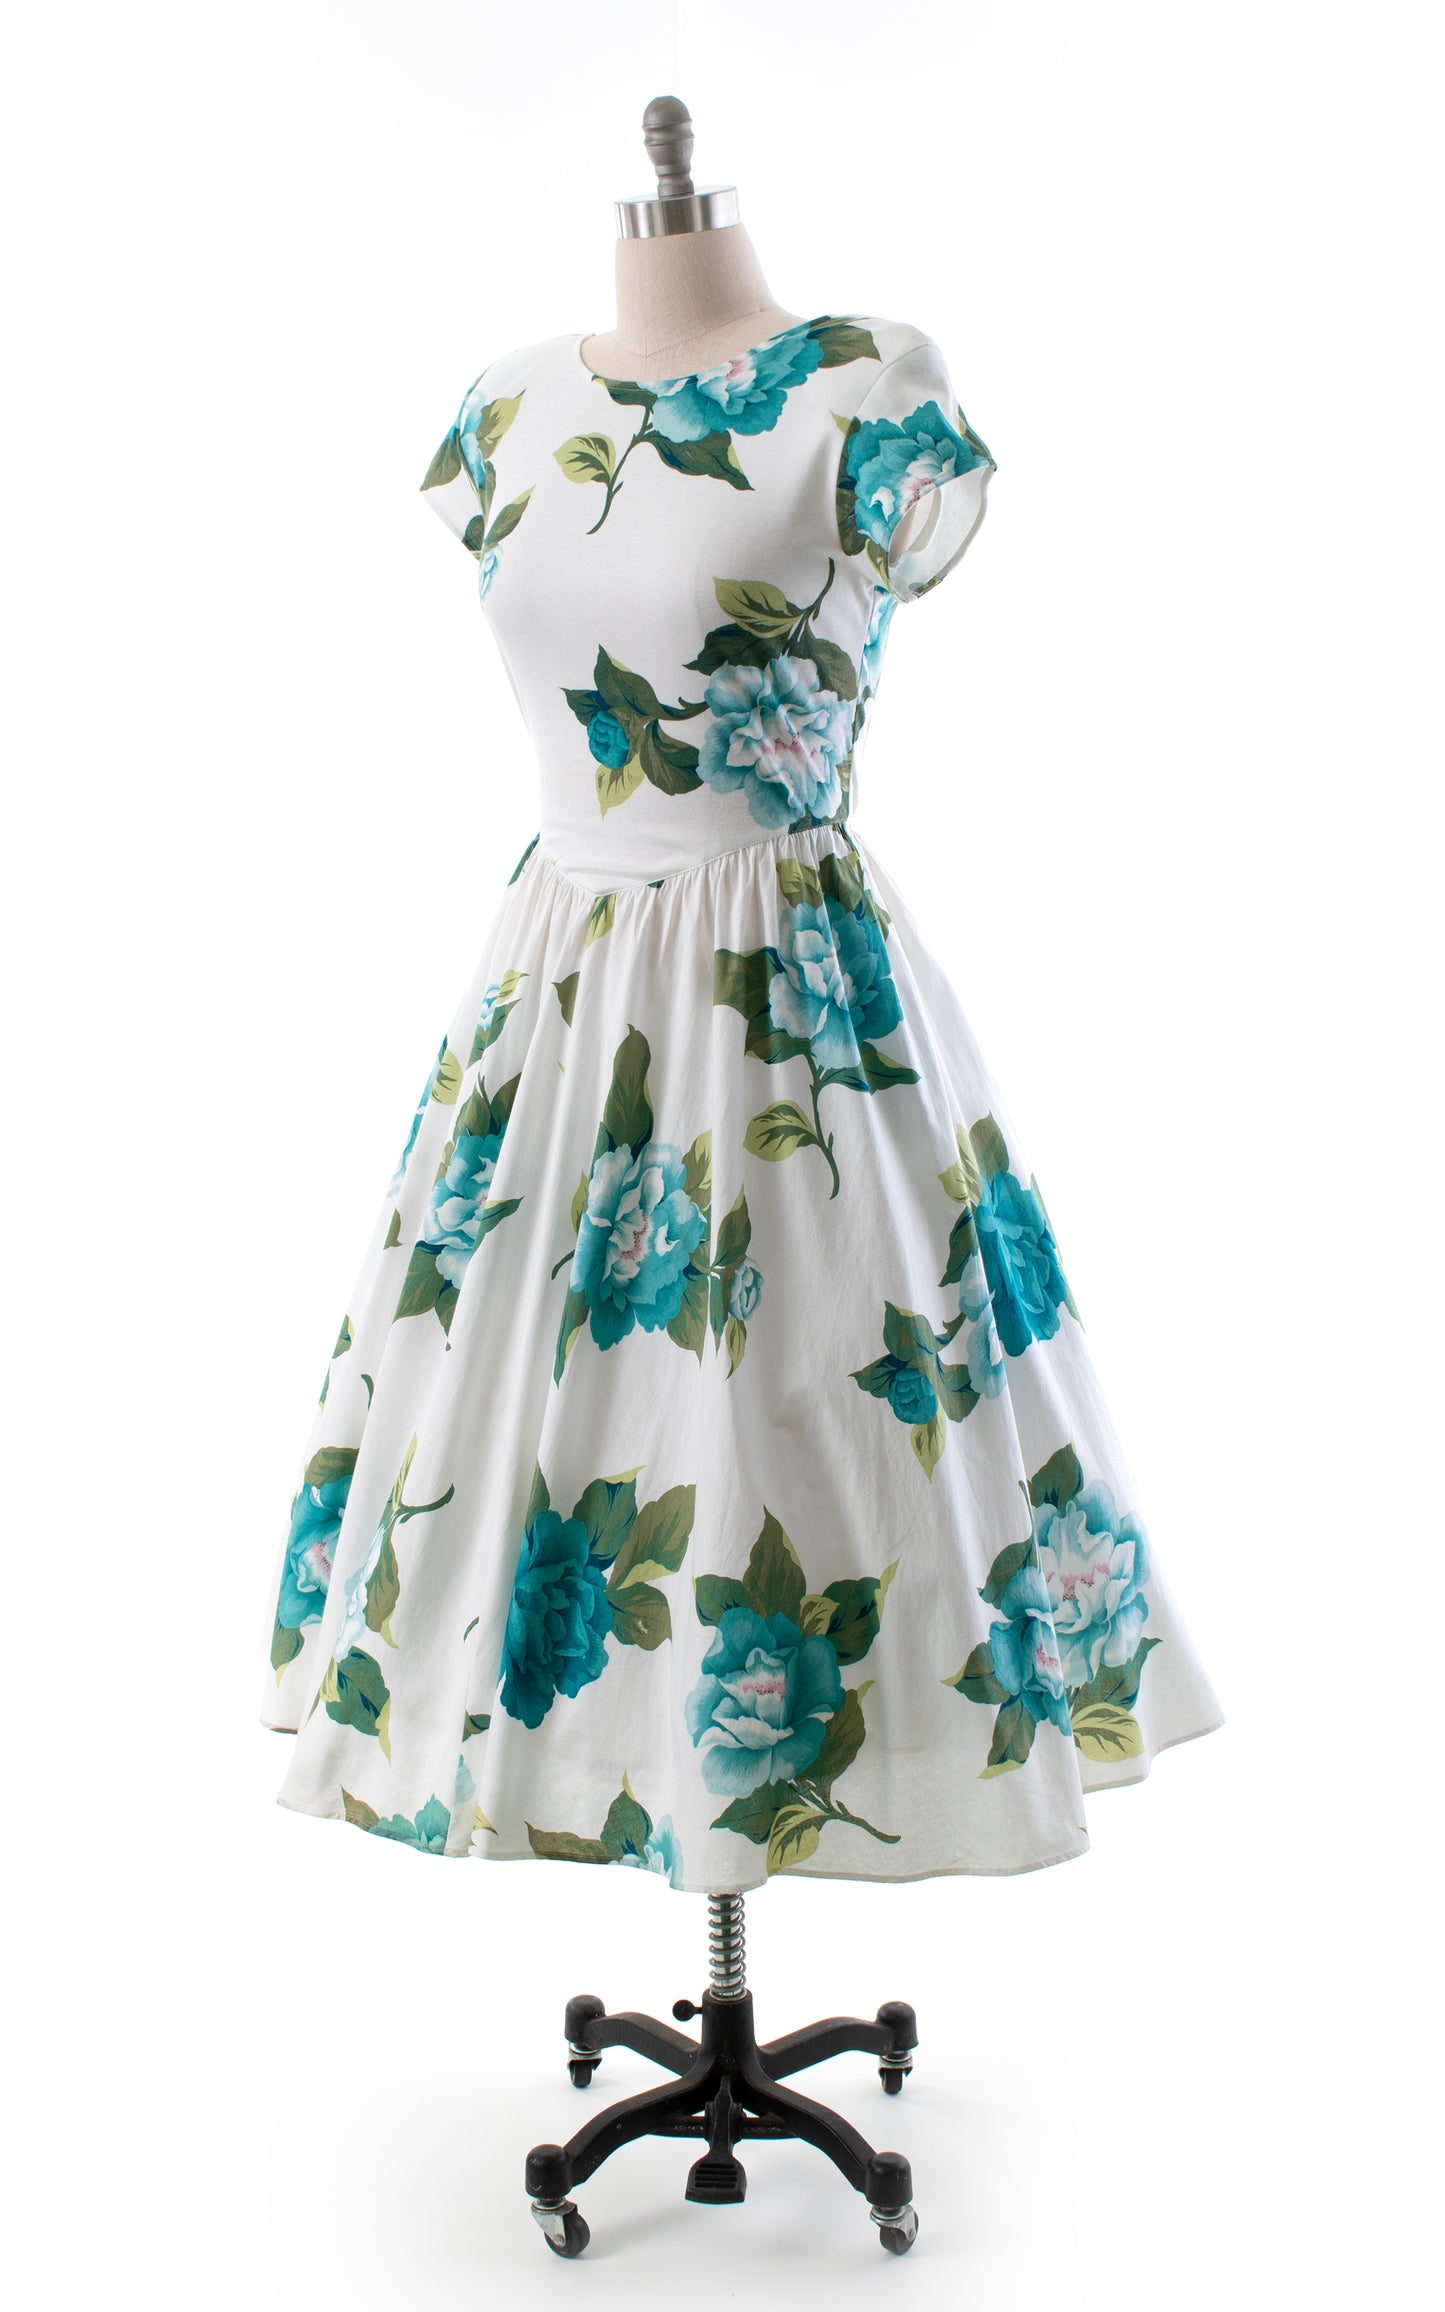 NEW ARRIVAL || 1980s CAROL ANDERSON Floral Dress | medium/large